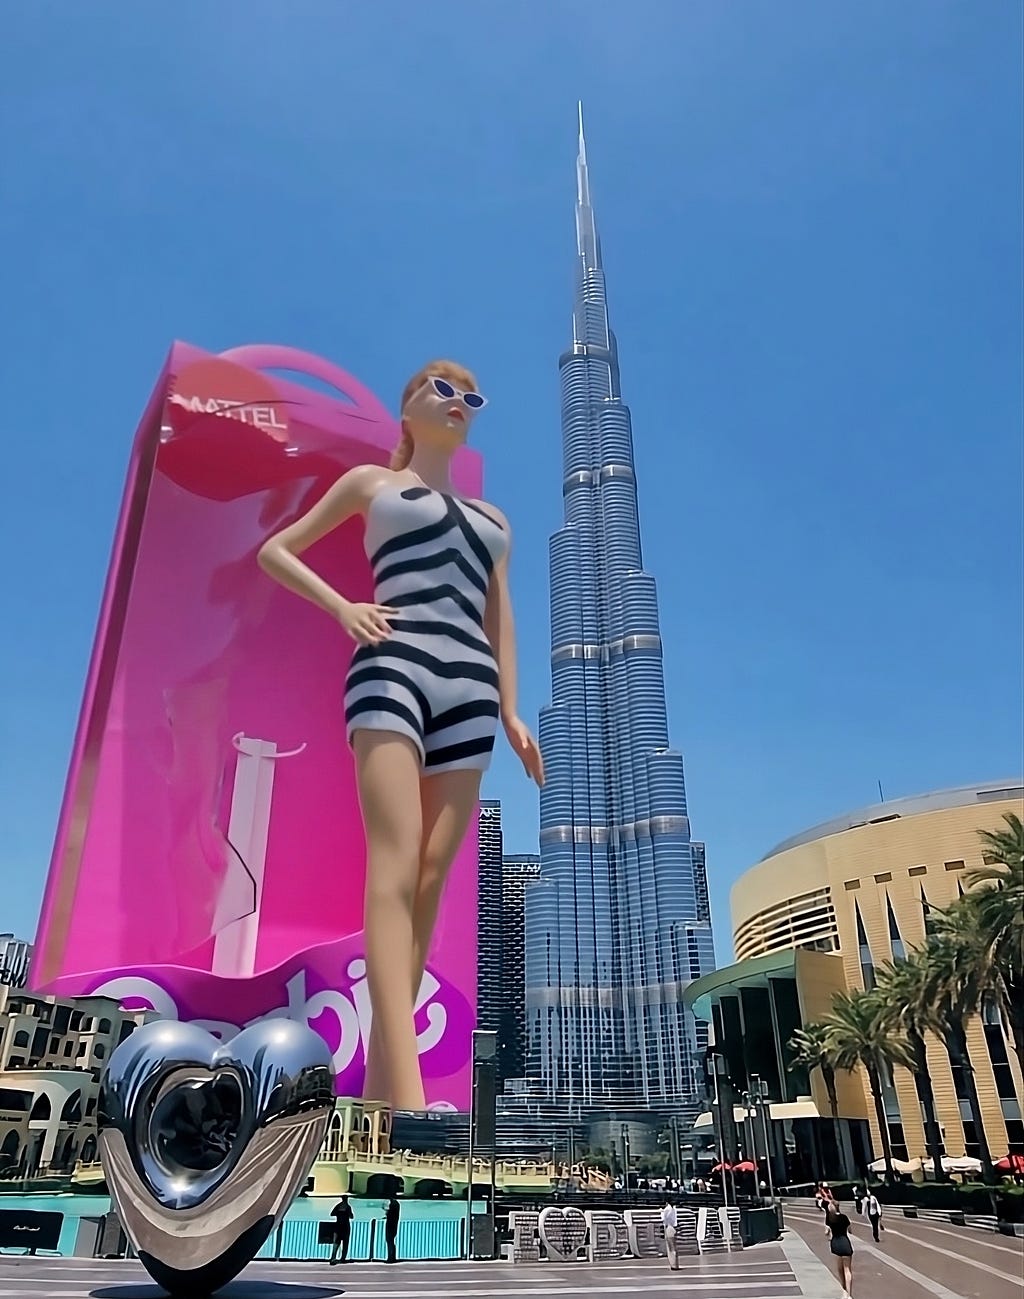 Giant towering Barbie Doll next to the Burj Khalifa in Dubai.